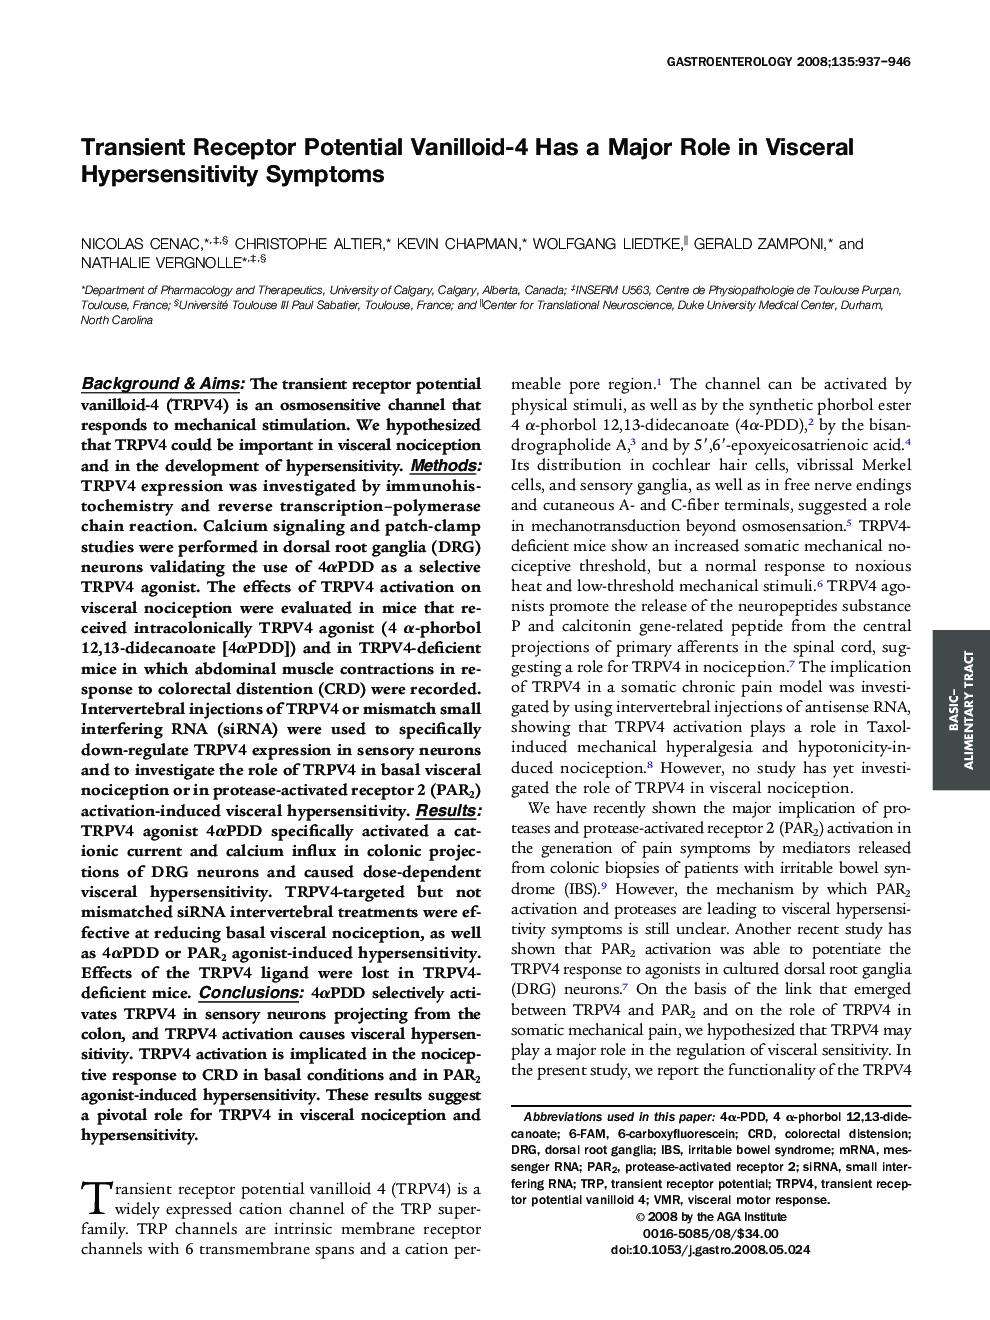 Transient Receptor Potential Vanilloid-4 Has a Major Role in Visceral Hypersensitivity Symptoms